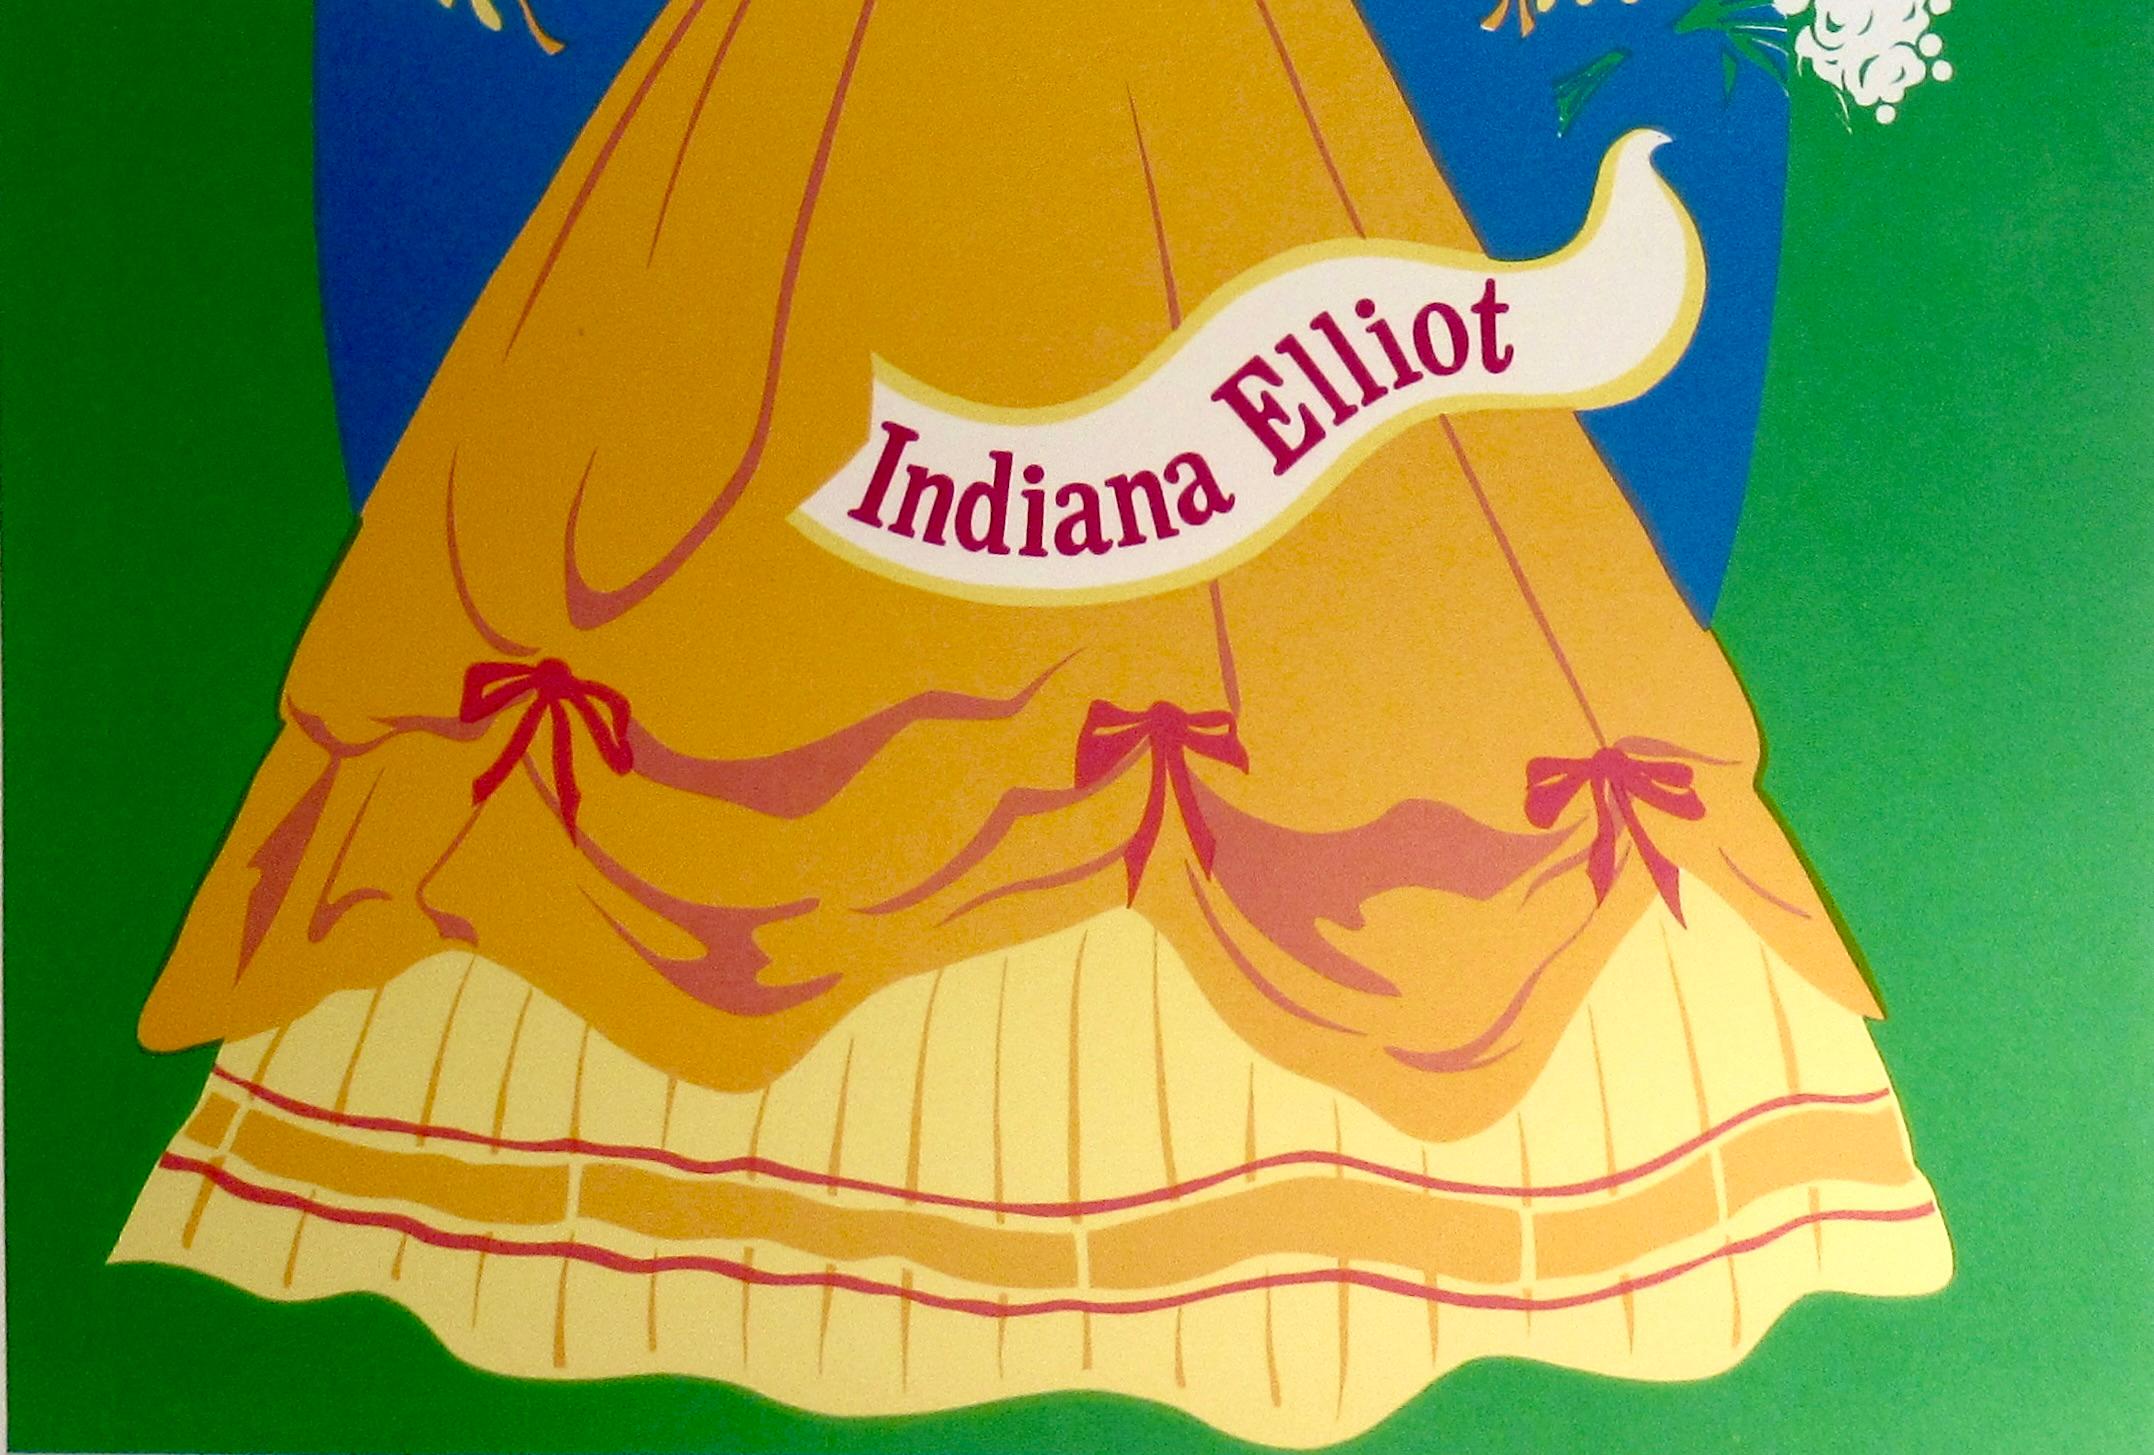 Indiana Elliot - Pop Art Print par Robert Indiana